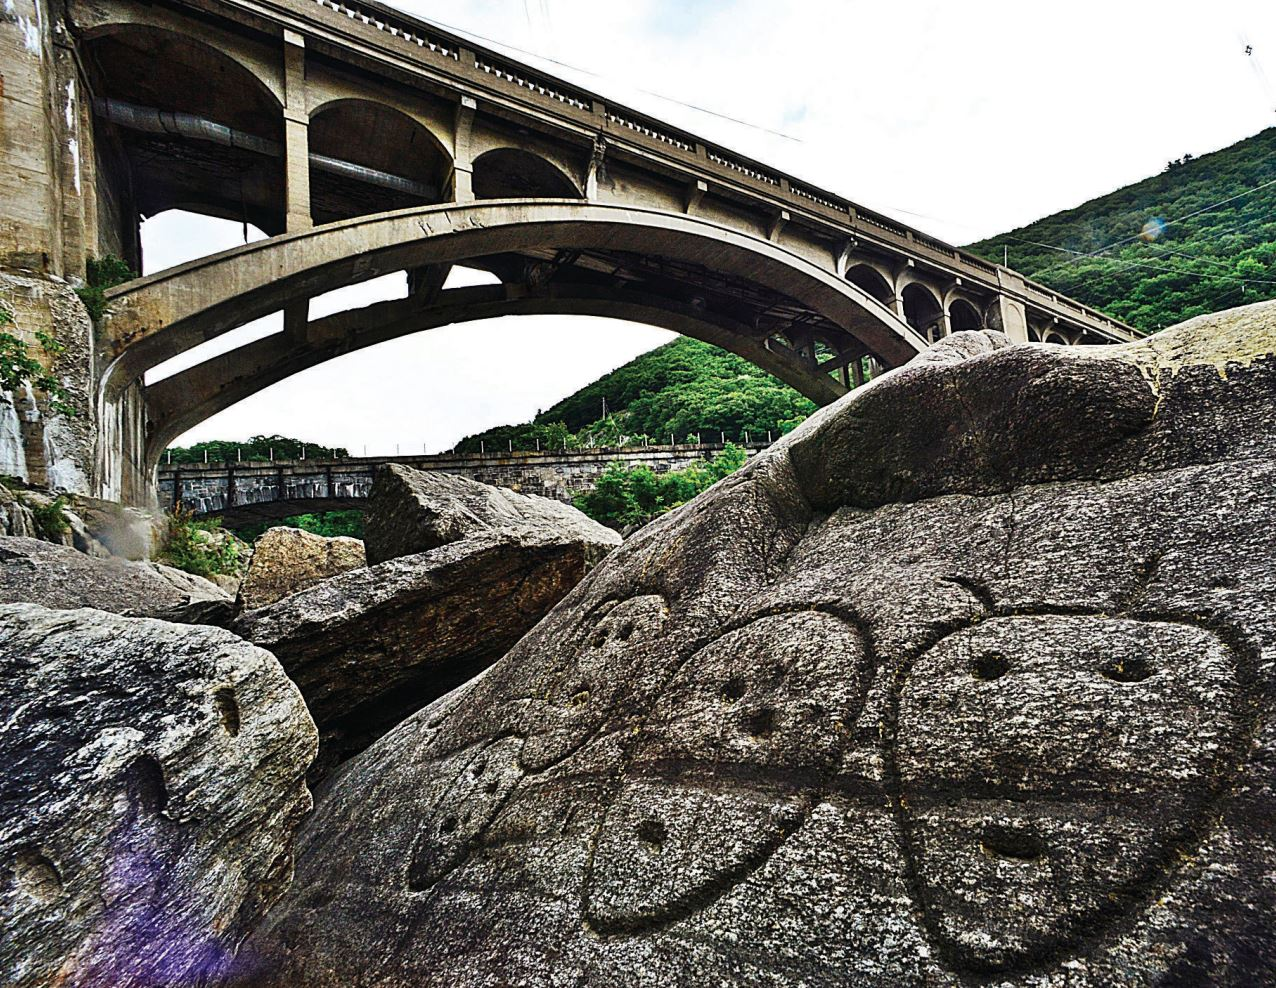 Petroglyphs below a large bridge